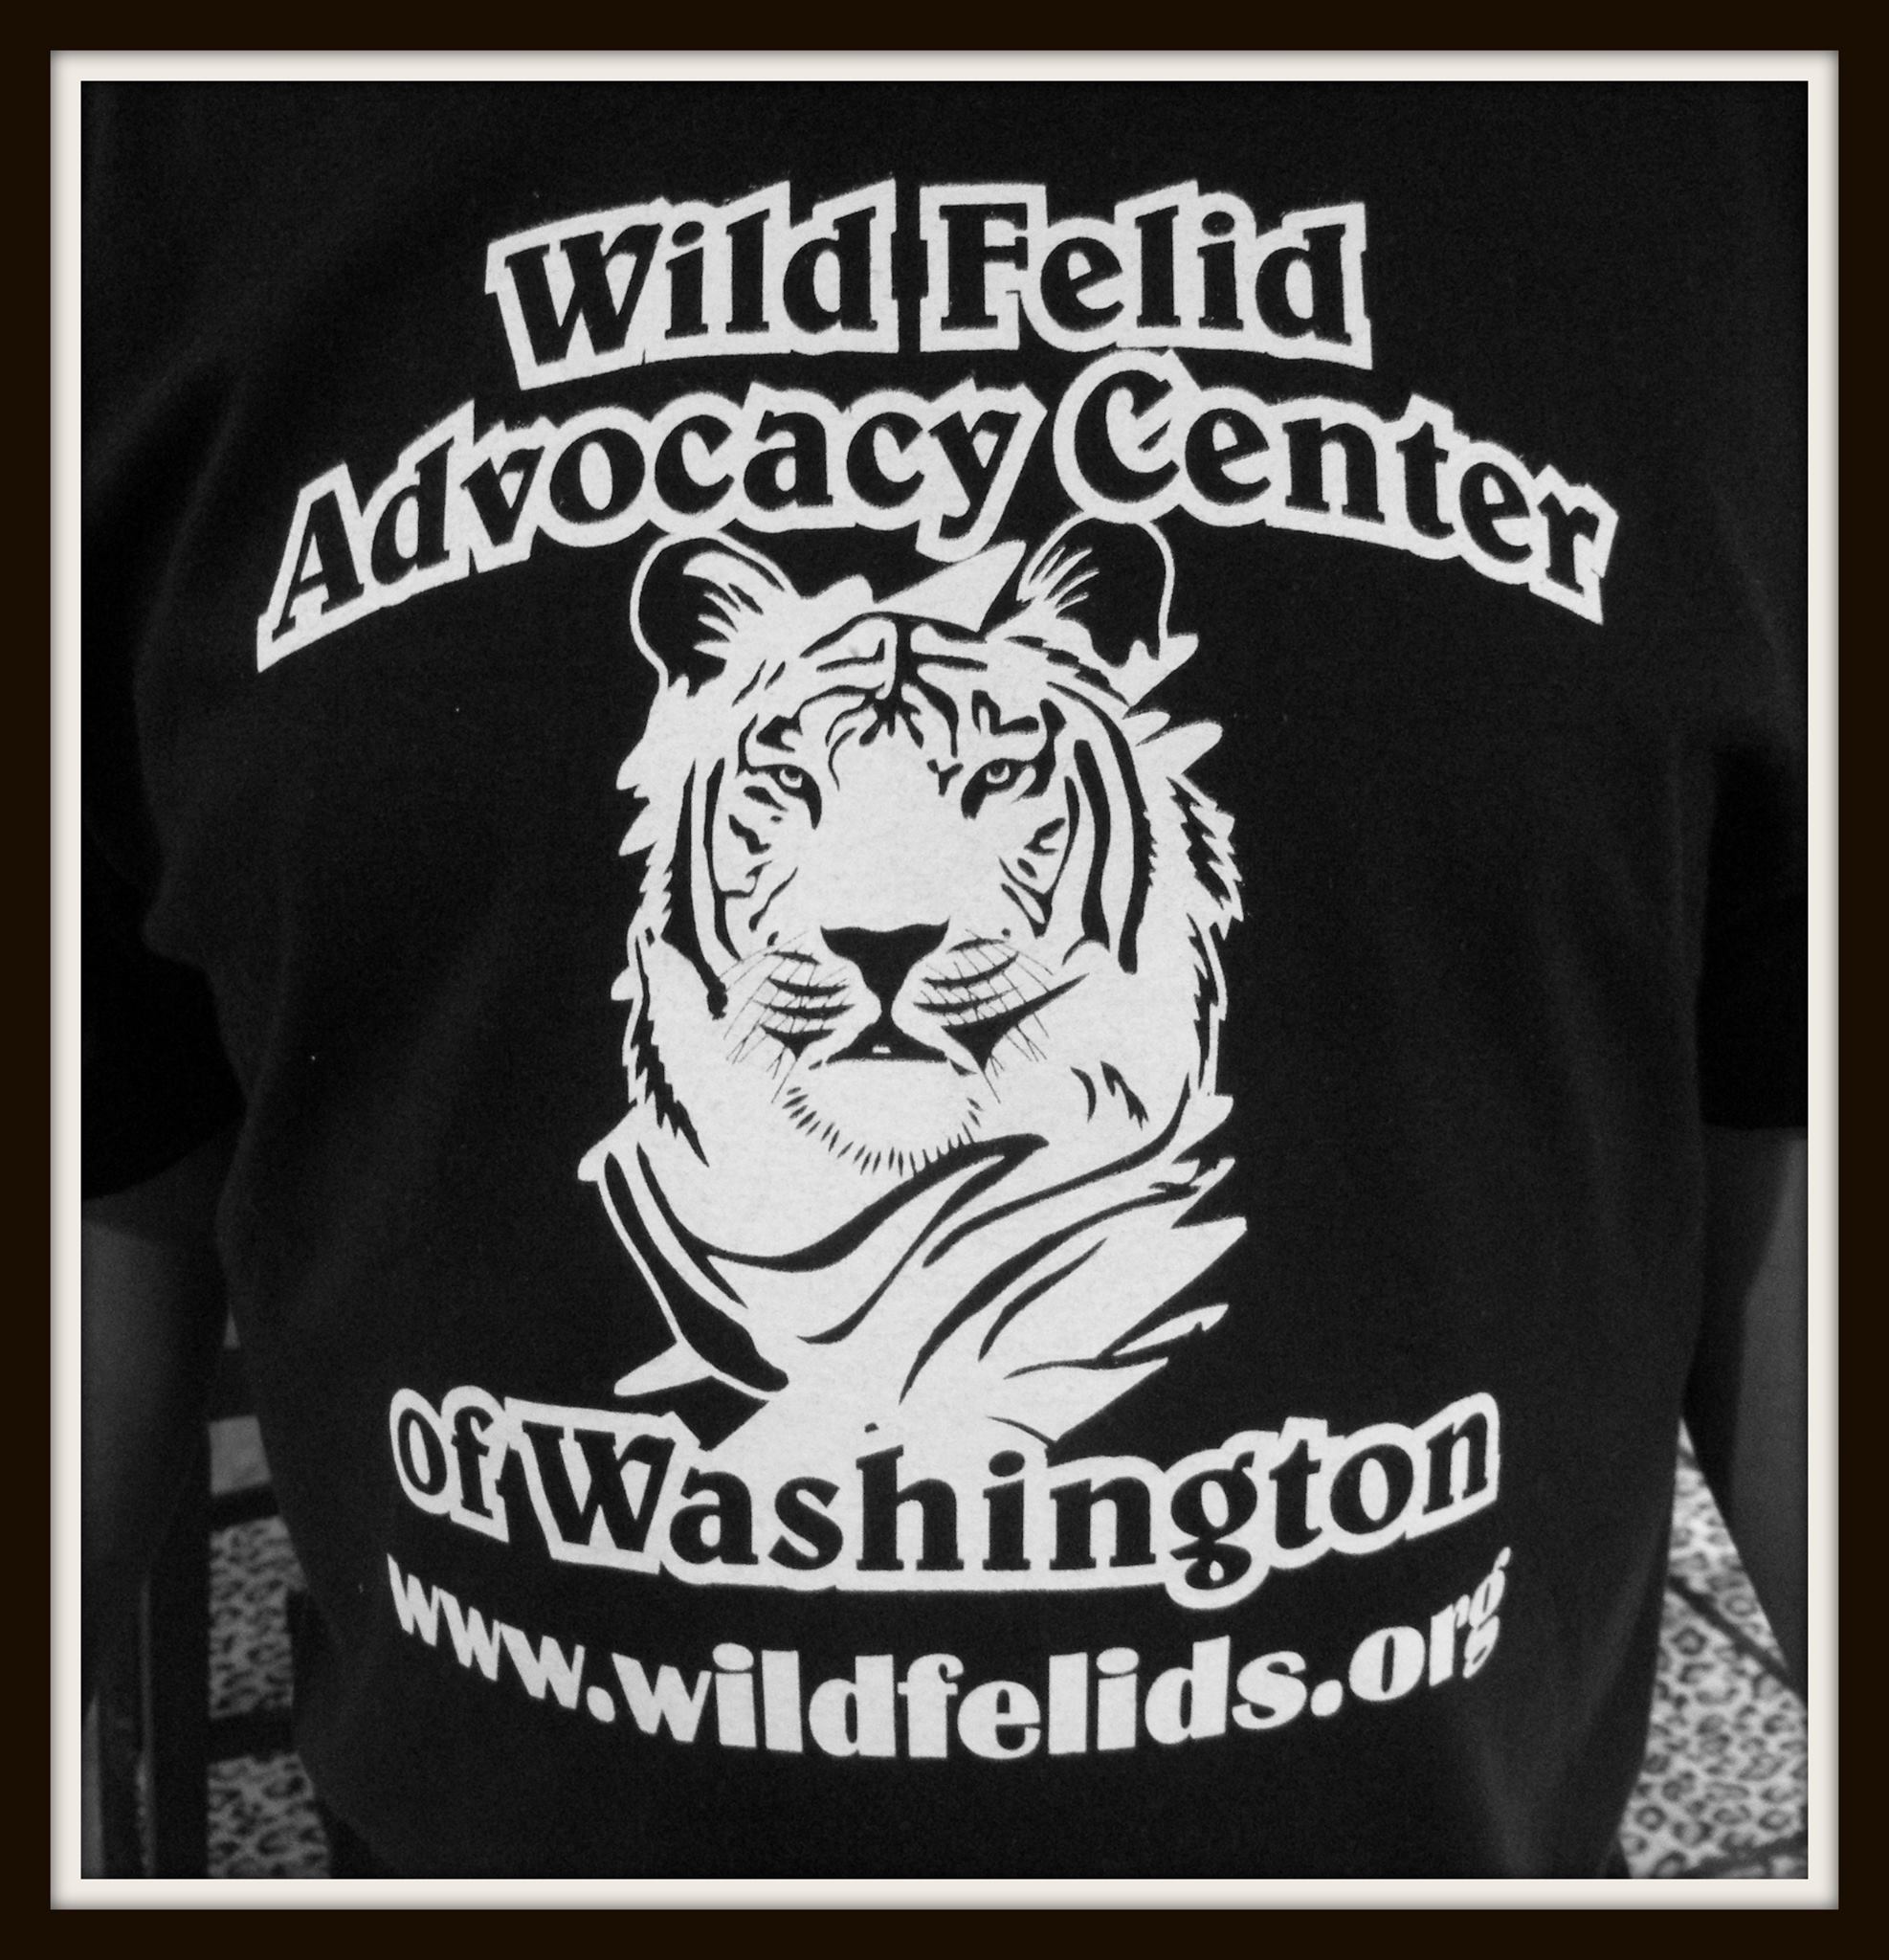 Wild Felid Advocacy Center of Washington - Logo